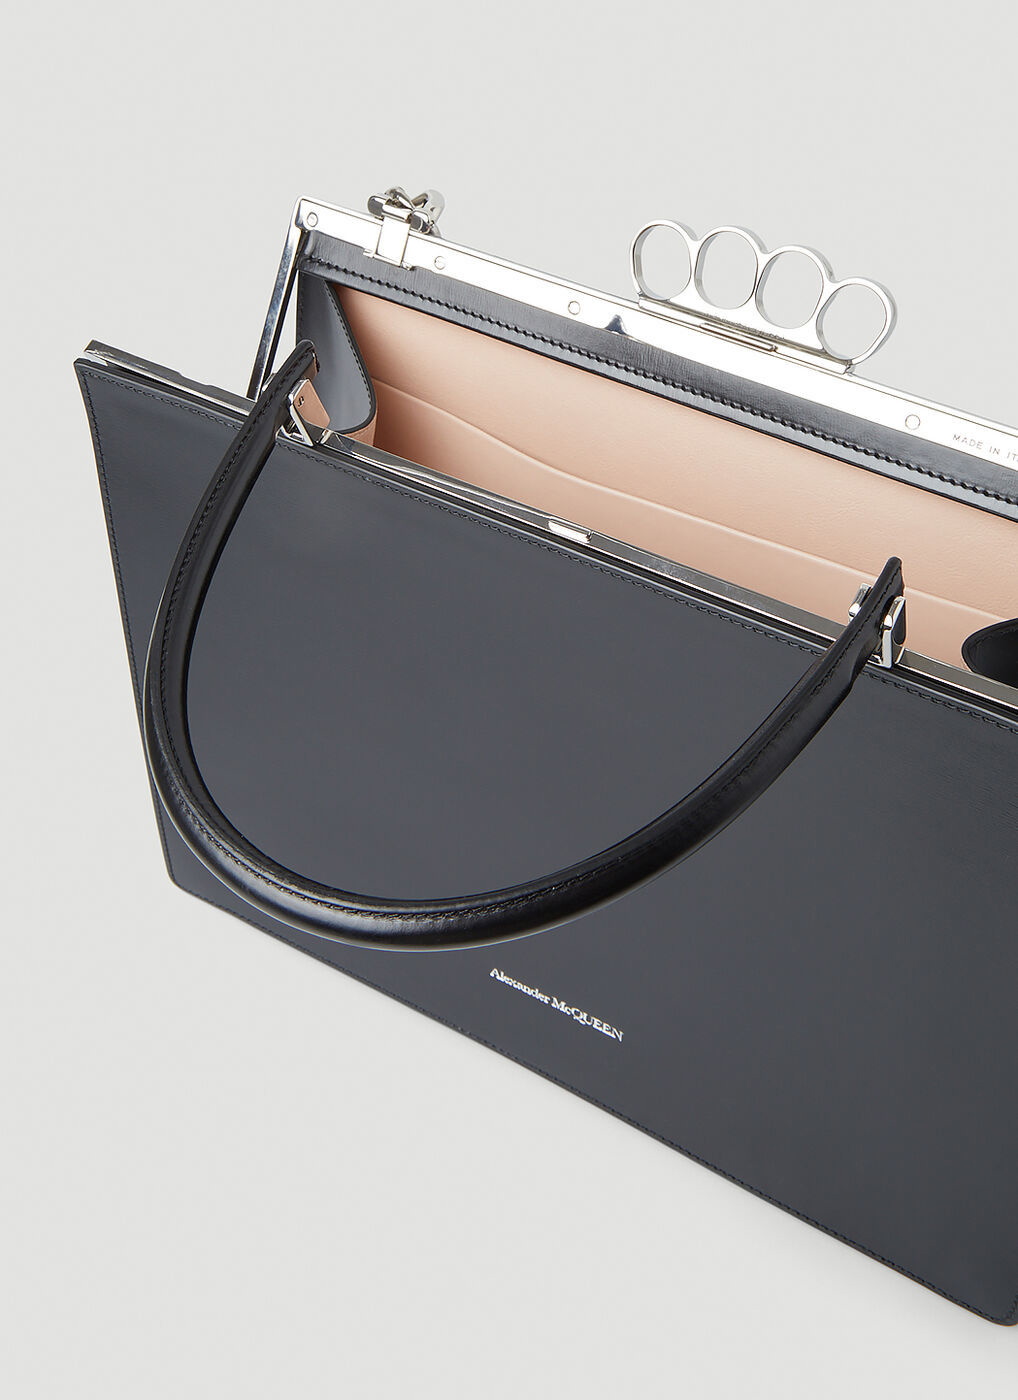 Alexander McQueen four ring frame bag新品未使用箱と保管袋付属